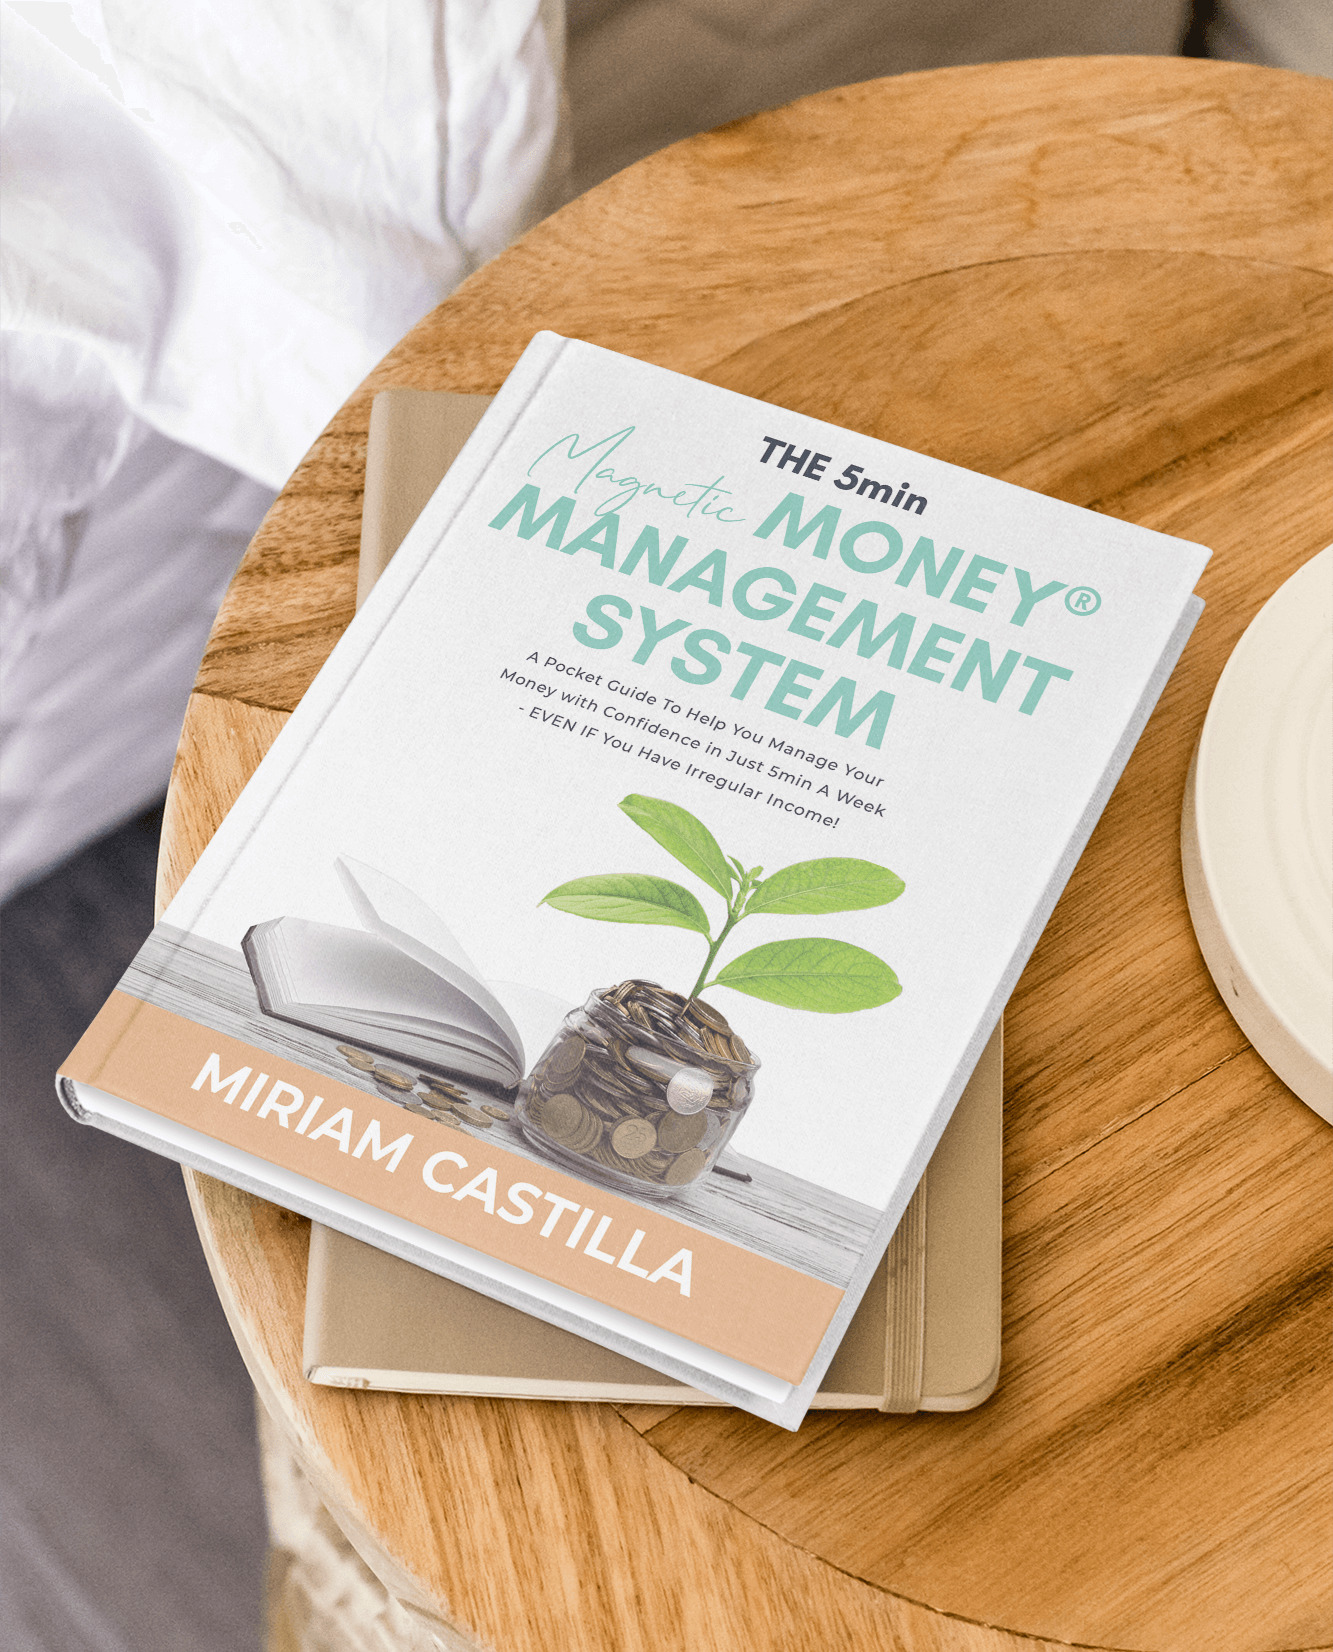 Magnetic Money Management System Pocket Guide - Book on side table